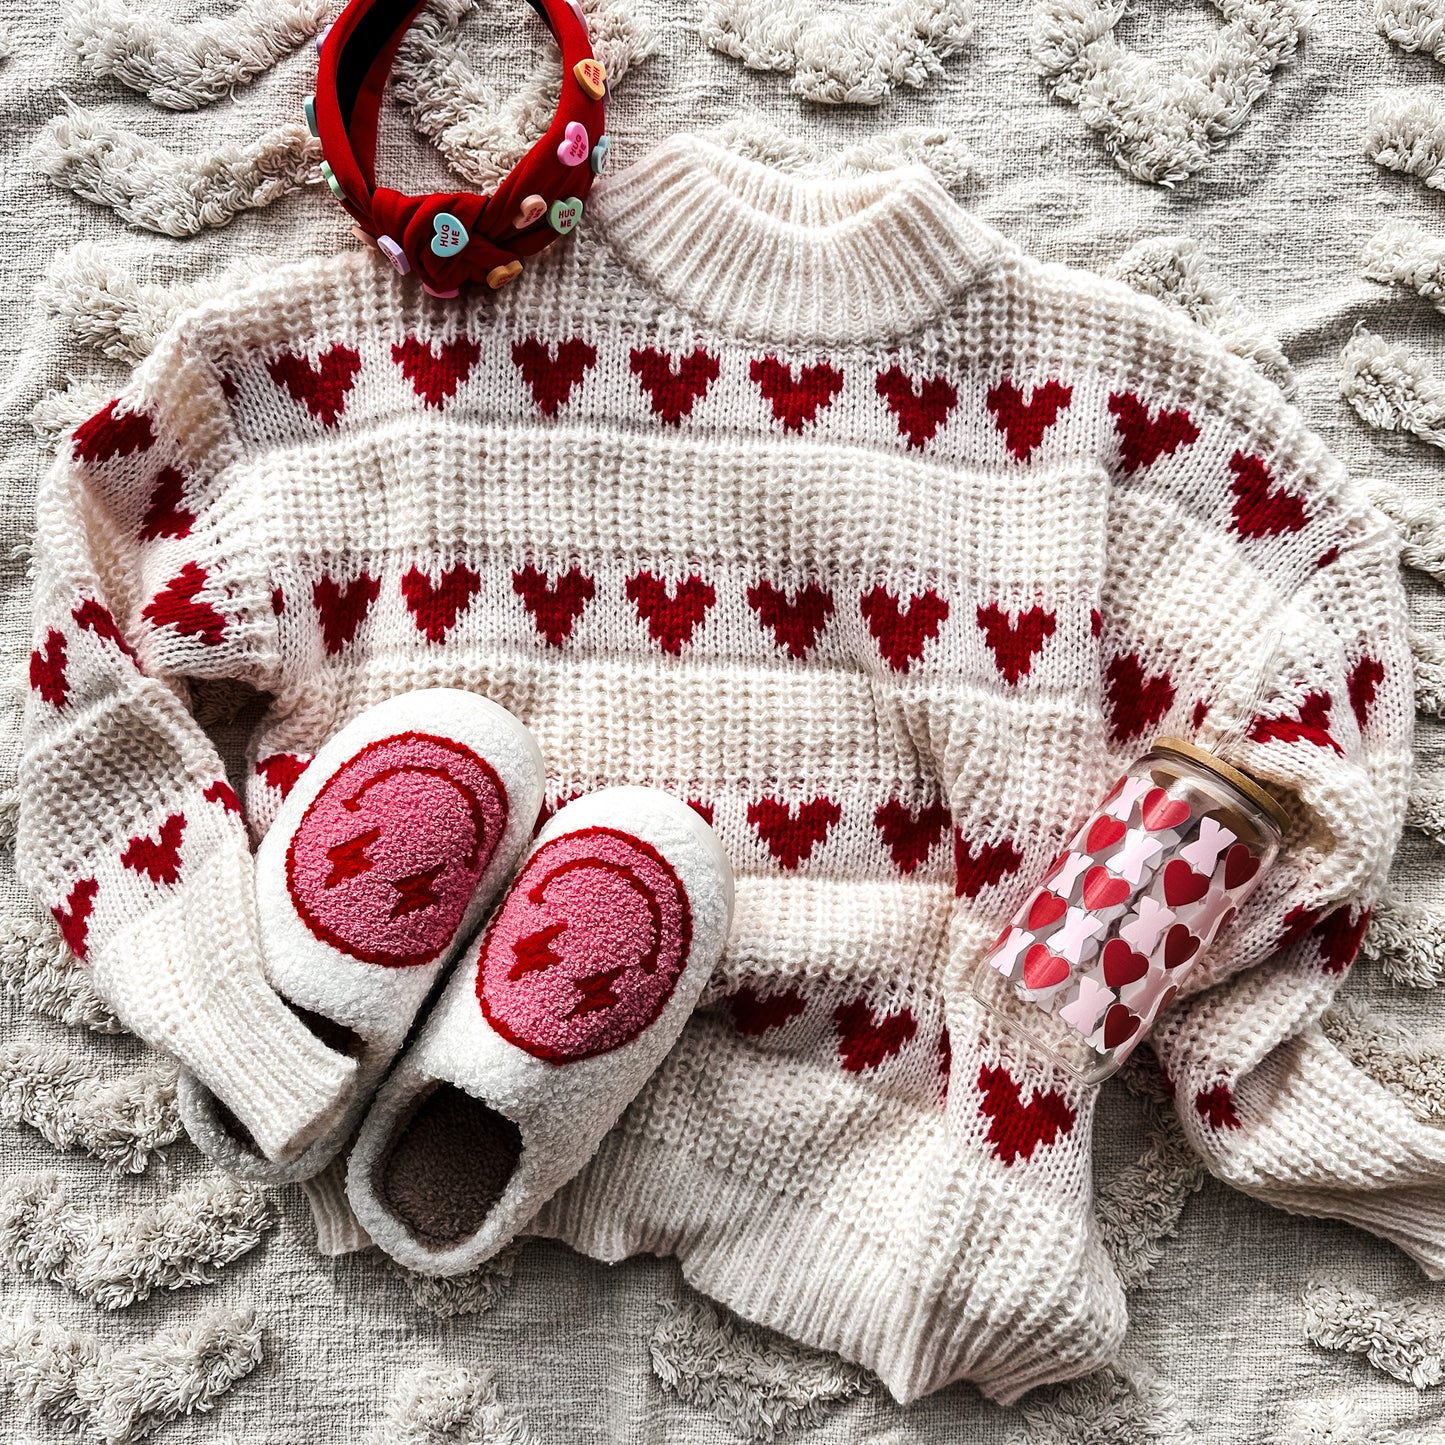 Chunky Heart Knit Sweater